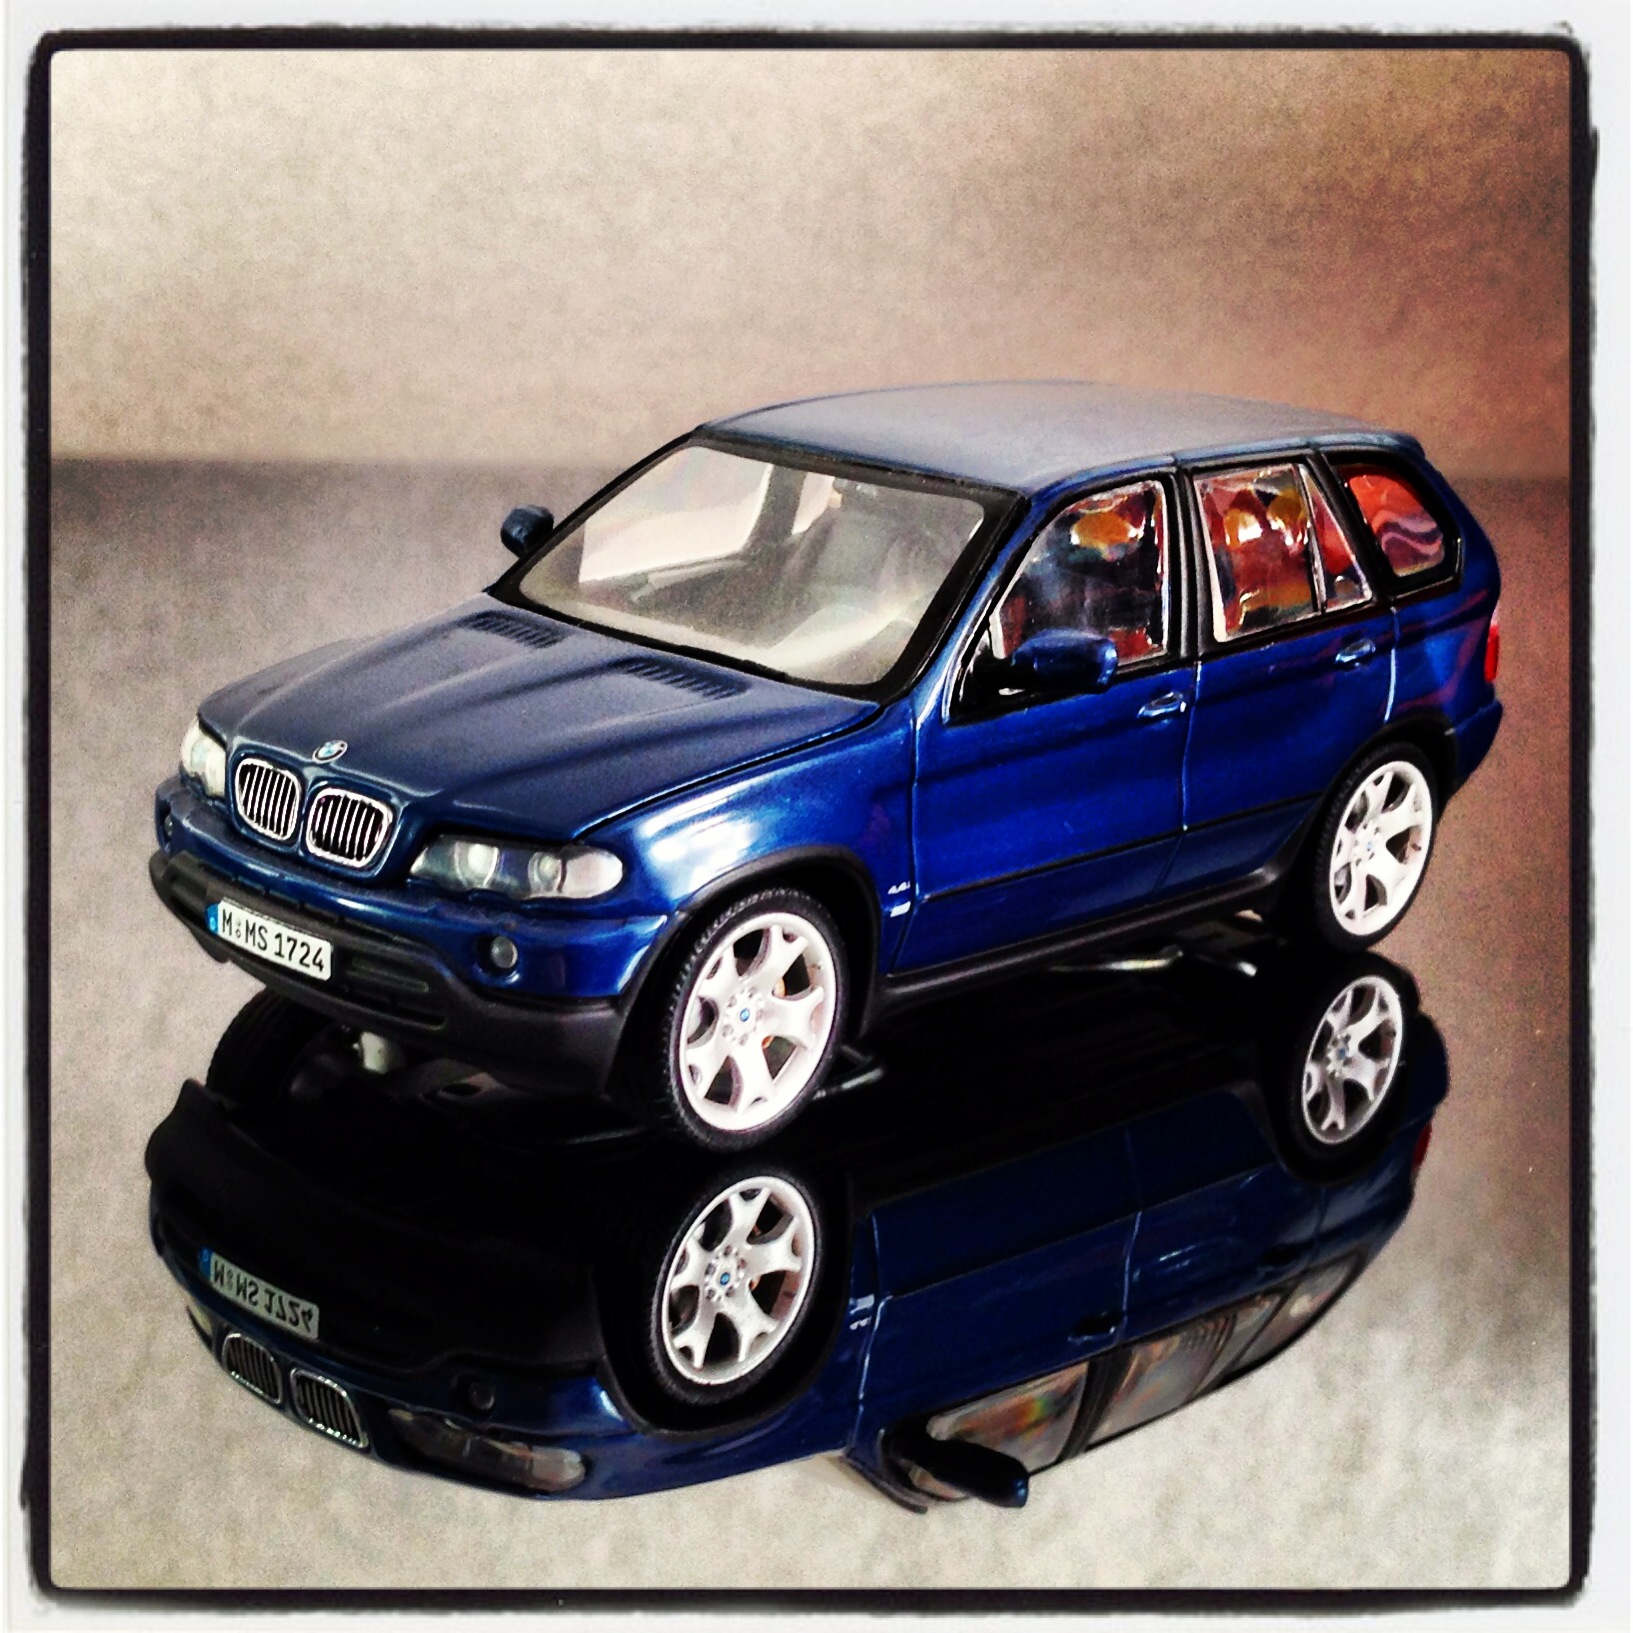 BMW X5 (E53) 1999, blue, SPECIAL EDITION (minichamps)